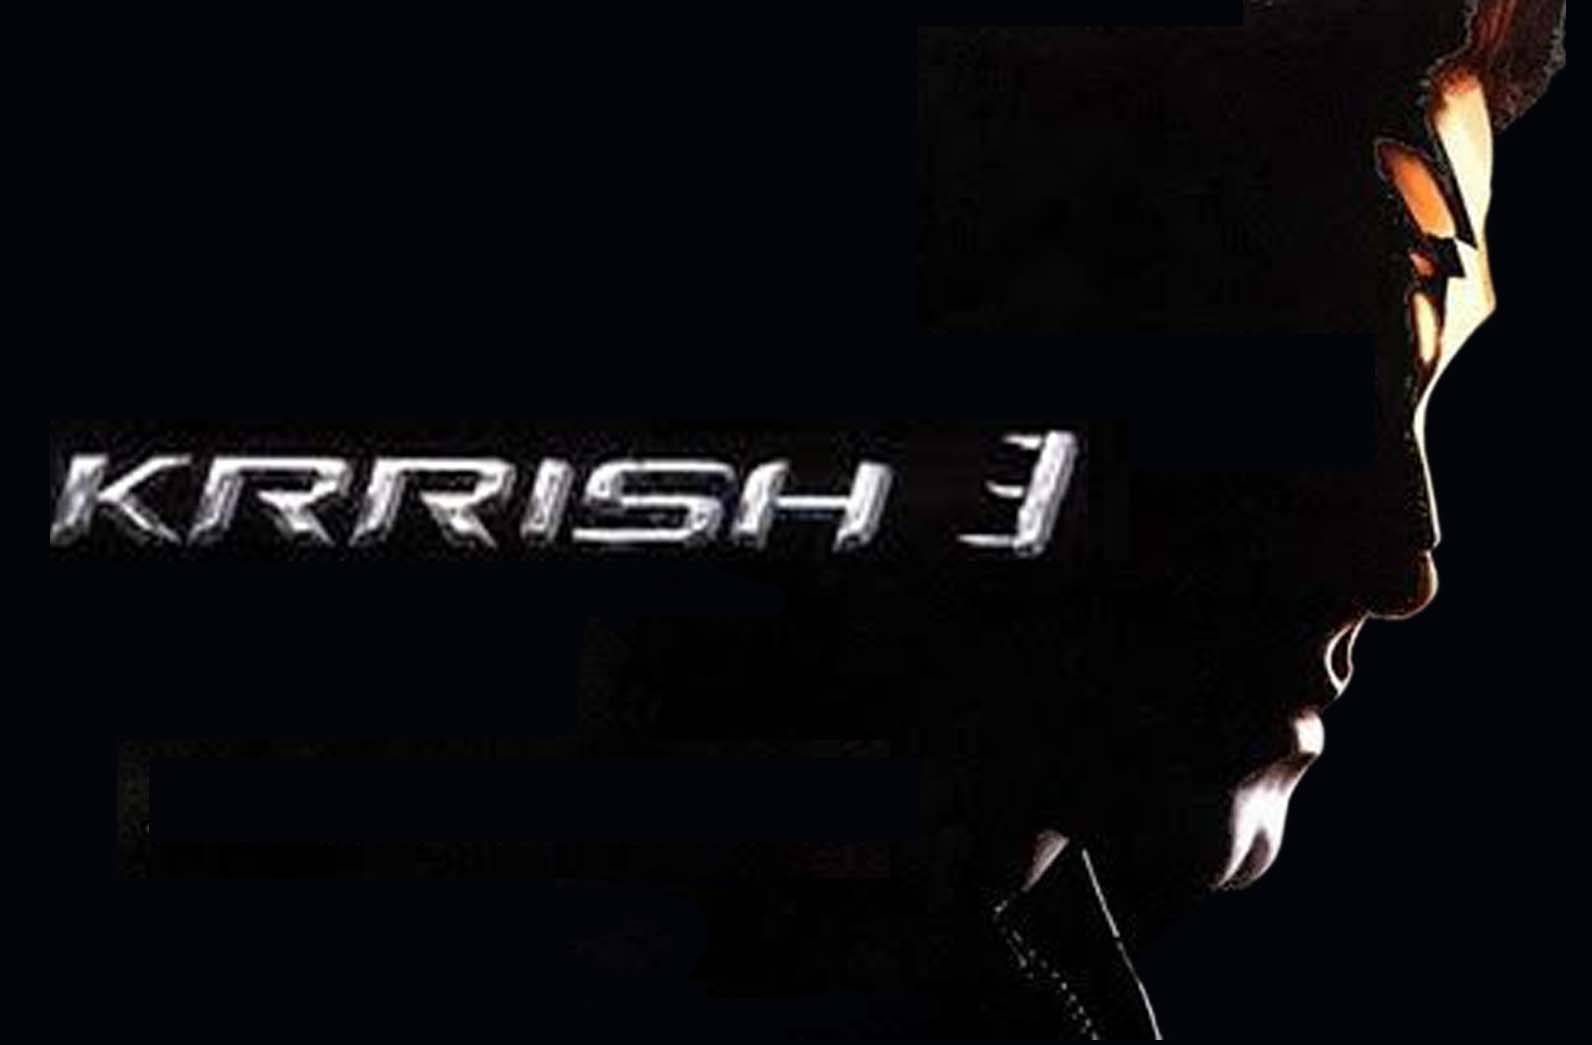 Krrish - Krrish 3 Full Hindi Movie , HD Wallpaper & Backgrounds